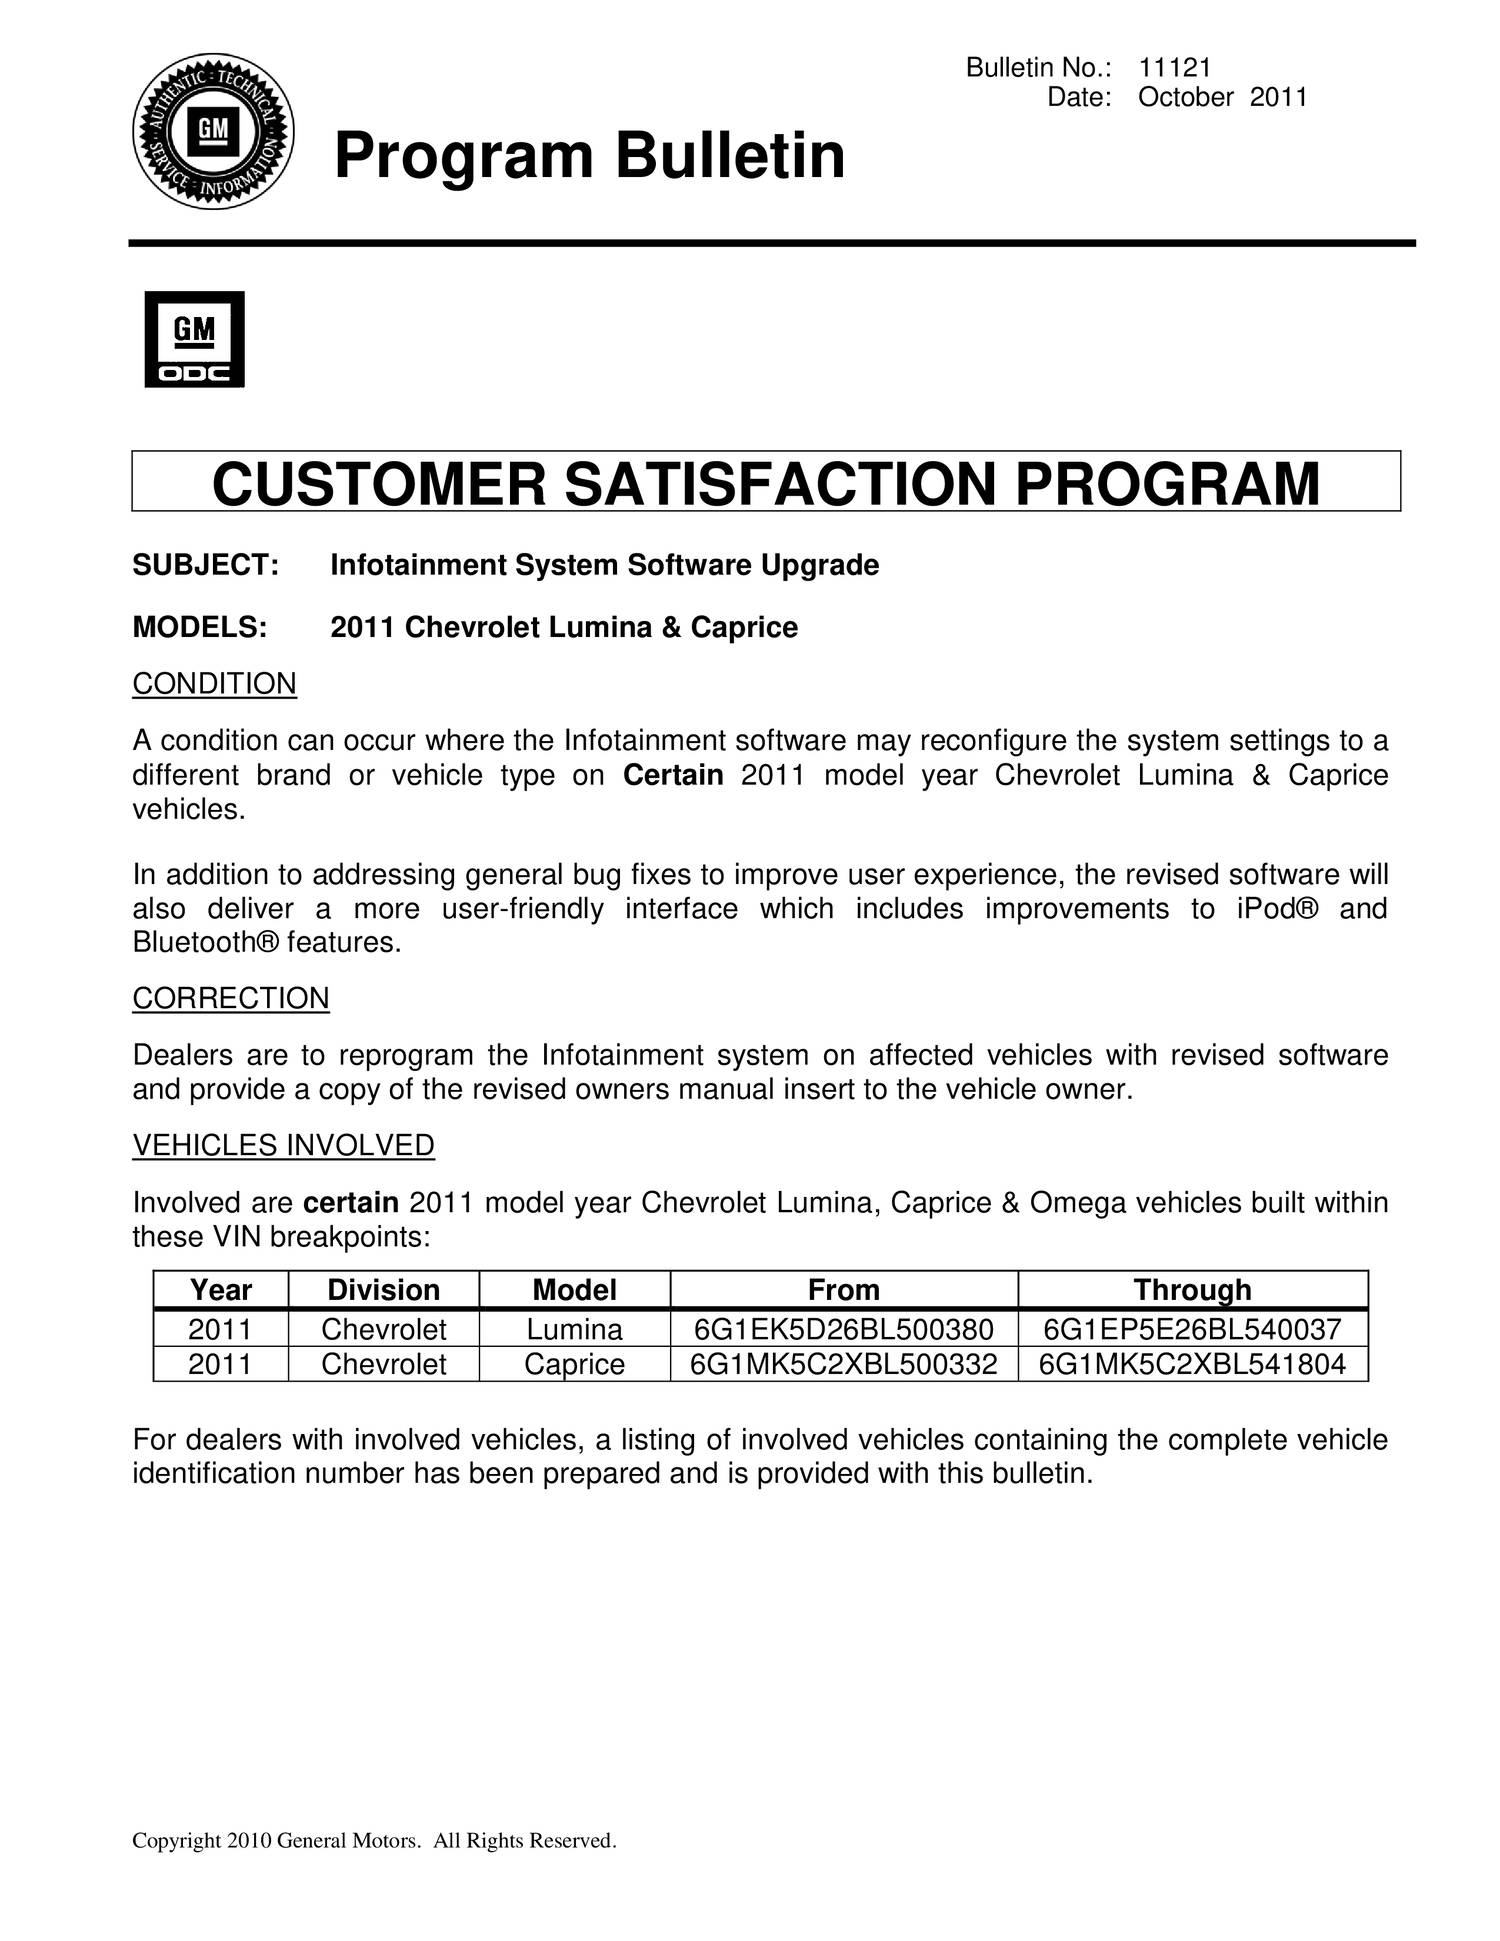 1138-11121 Customer Satisfaction Program.pdf | DocDroid